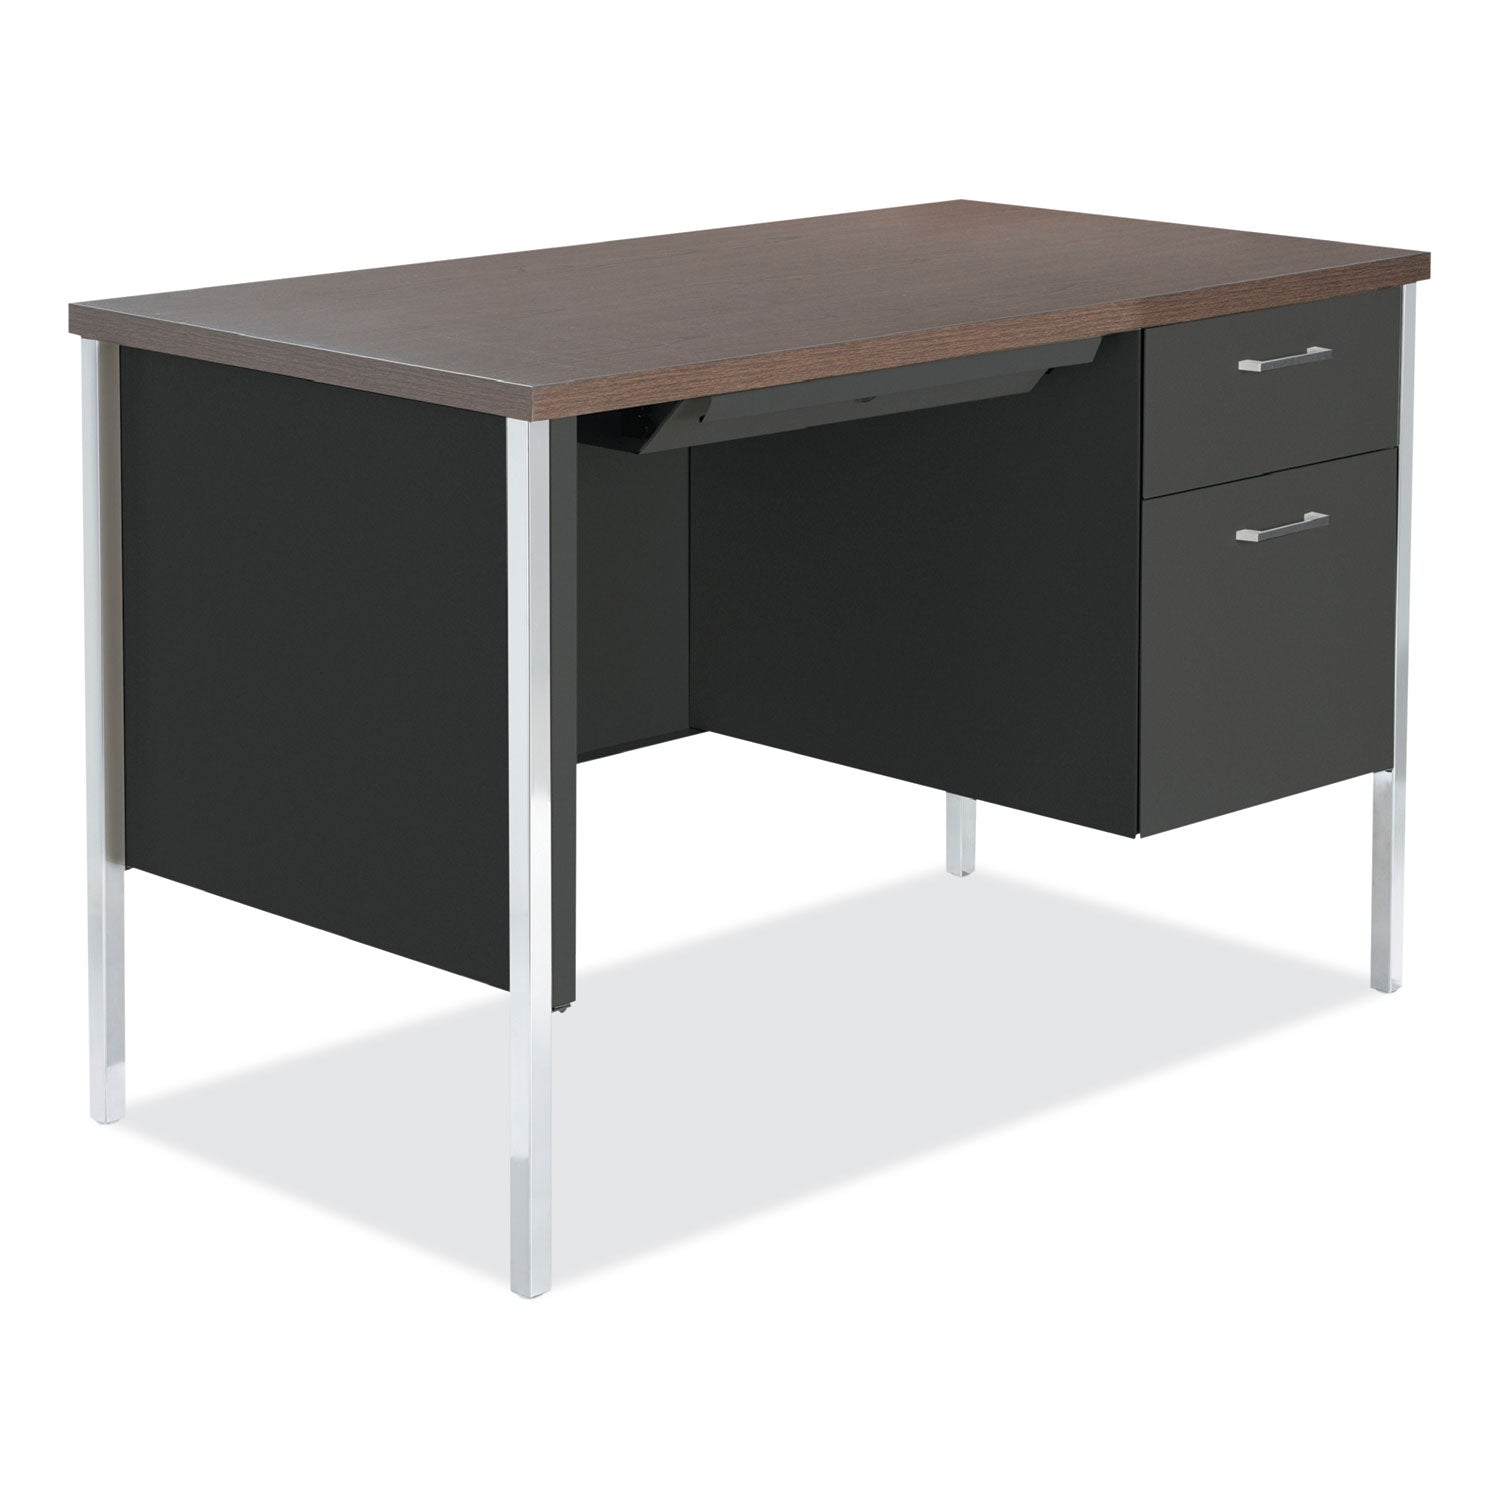 single-pedestal-steel-desk-4525-x-24-x-295-mocha-black-chrome-legs_alesd4524bm - 1